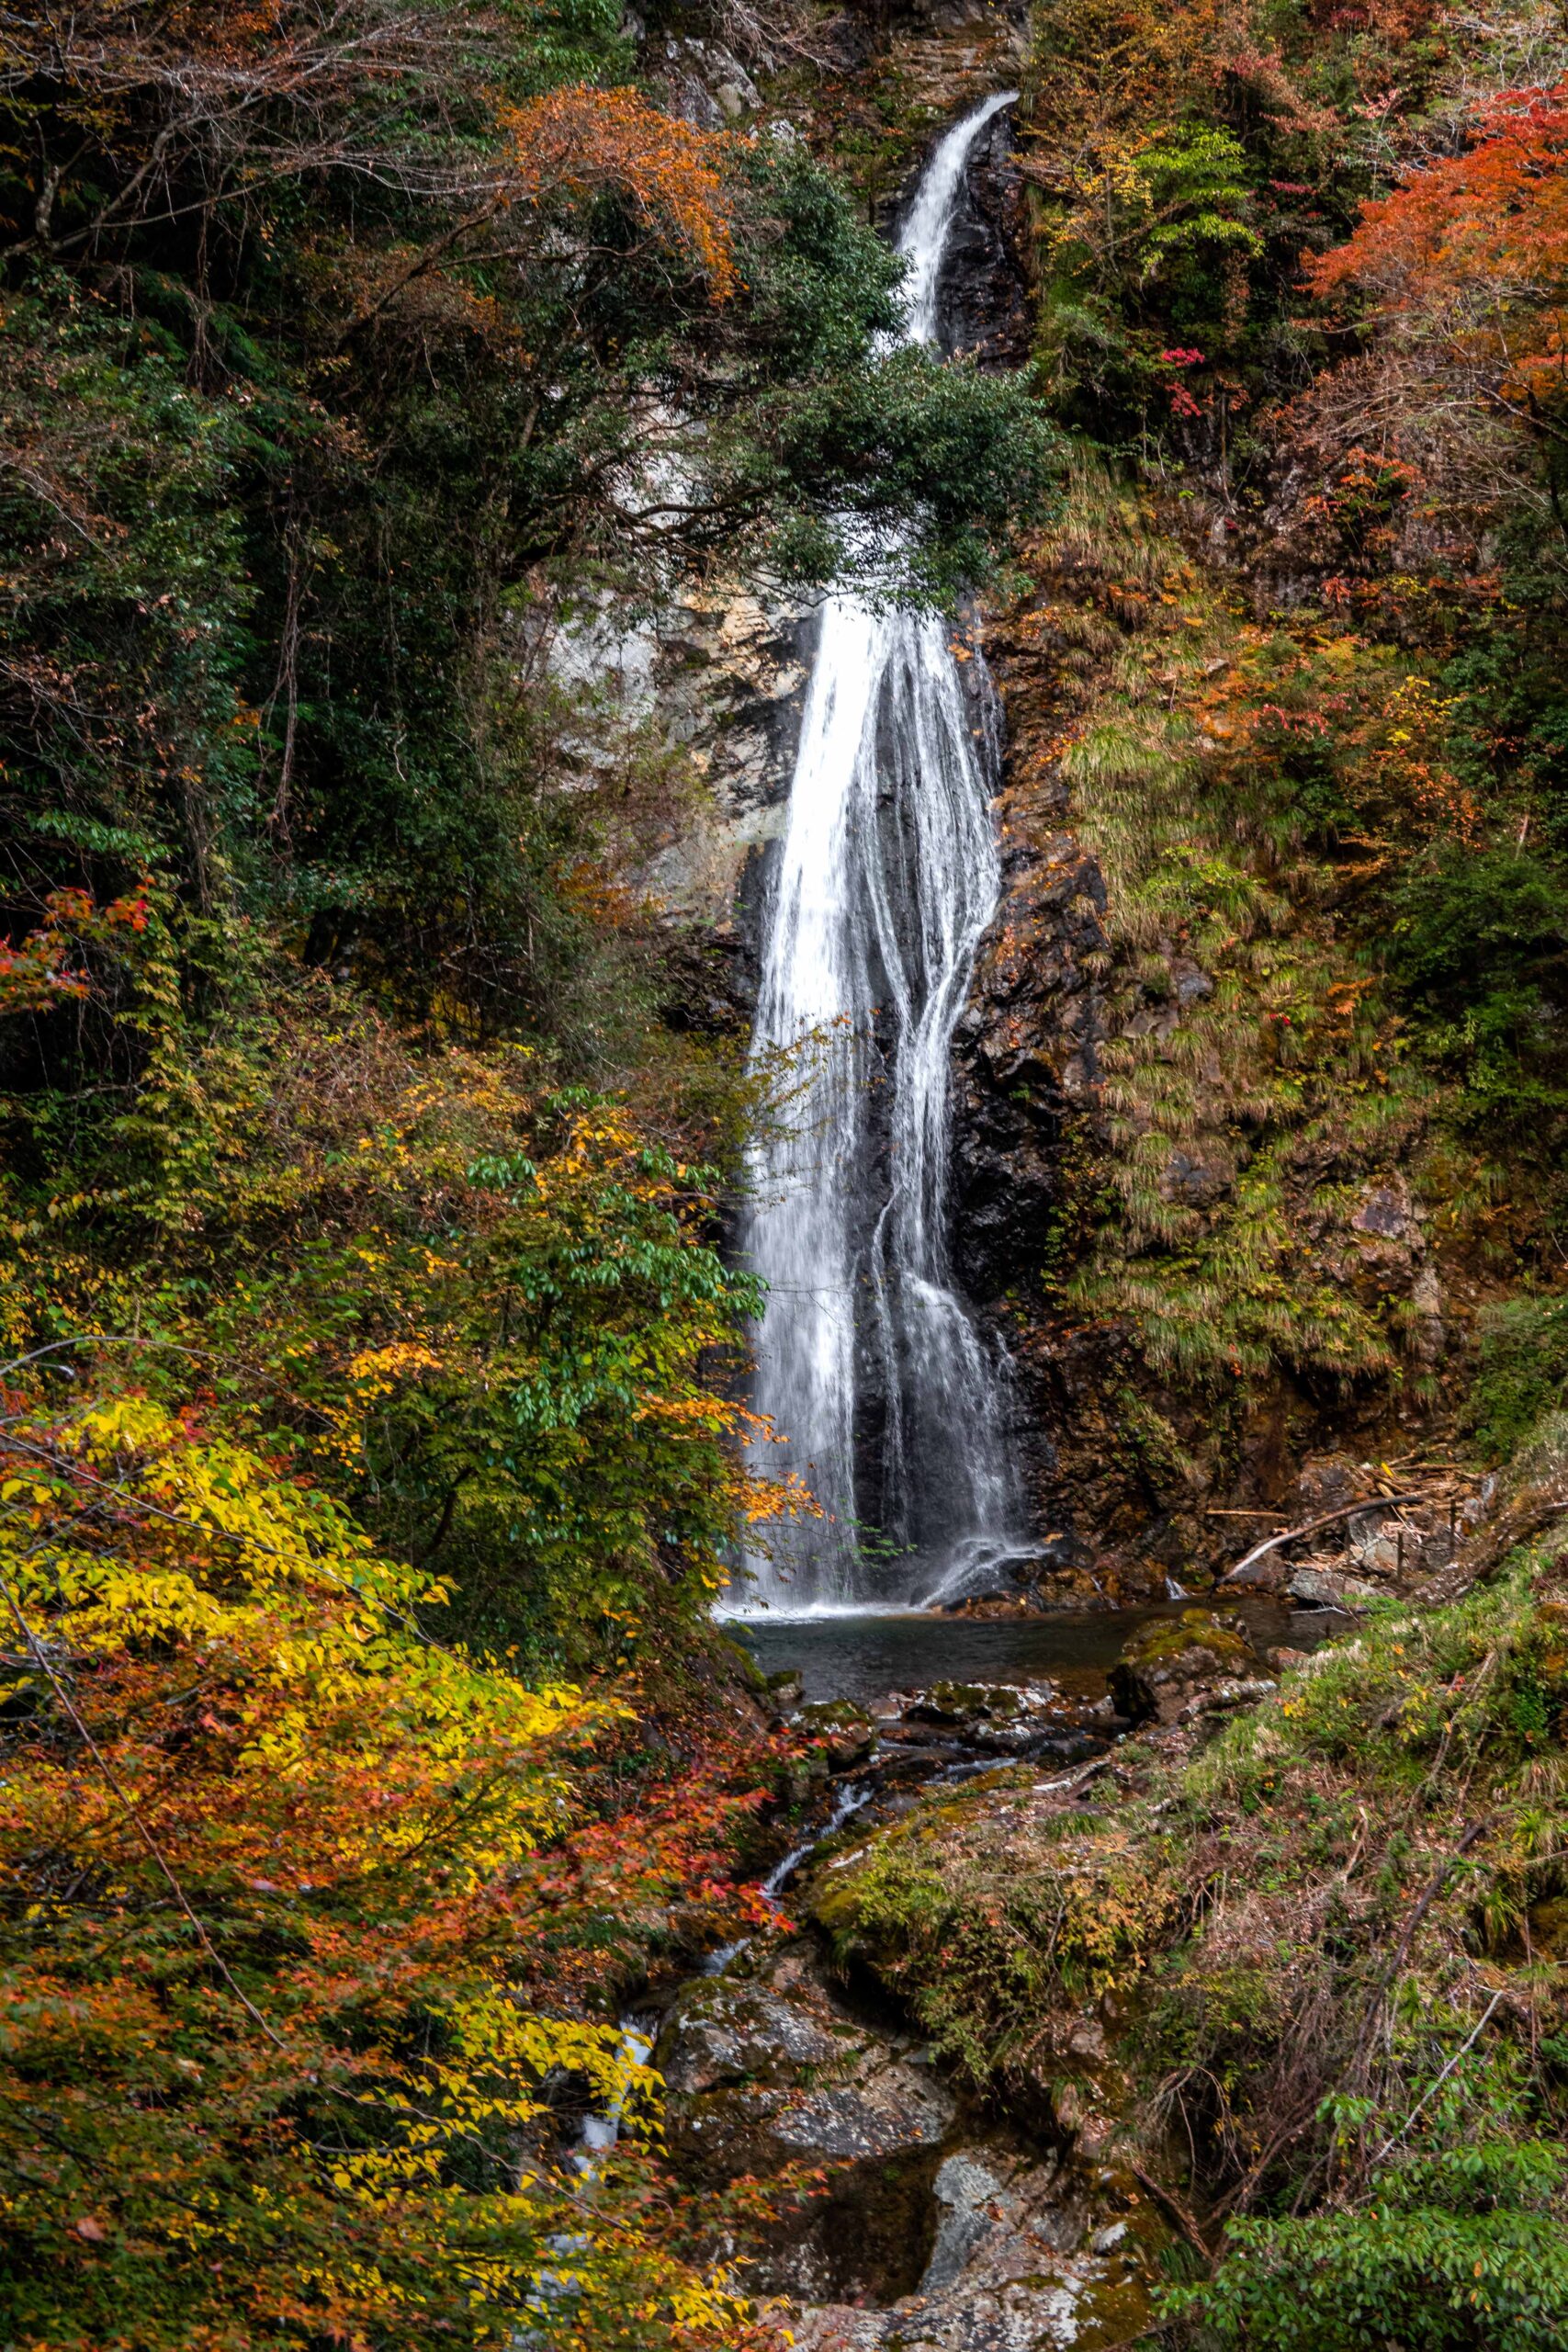 DSC07972-scaled 兵庫県  原不動滝(日本の滝100選に選定された紅葉景色の美しい絶景の滝 ! 撮影した写真の紹介、 アクセス情報など)　